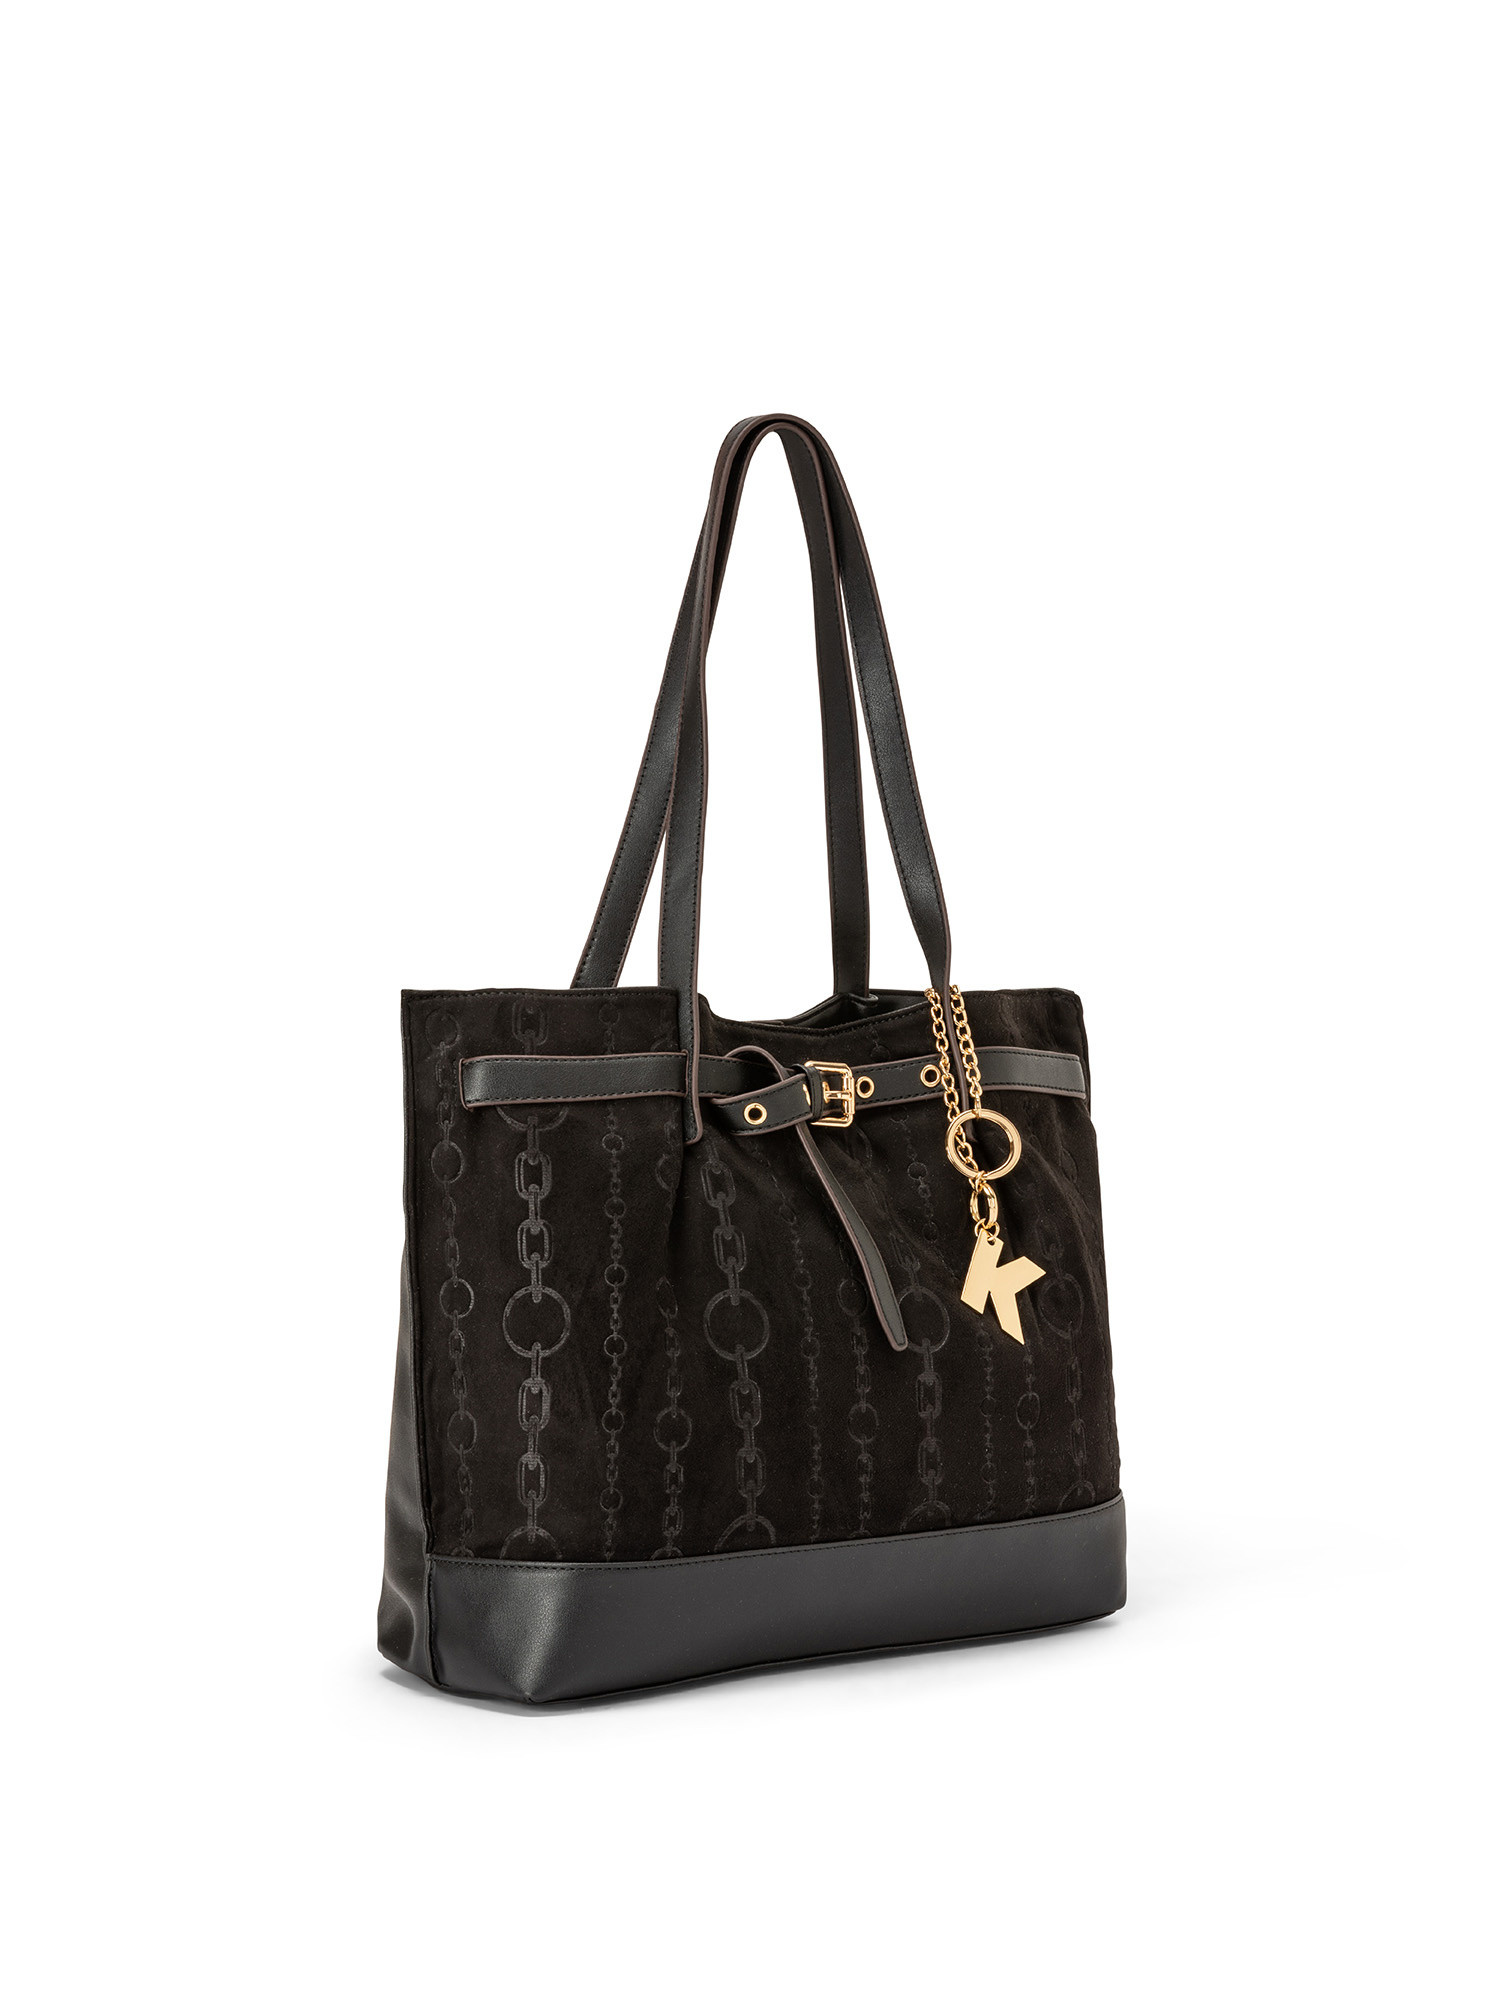 Koan - Shopping bag with print, Black, large image number 1